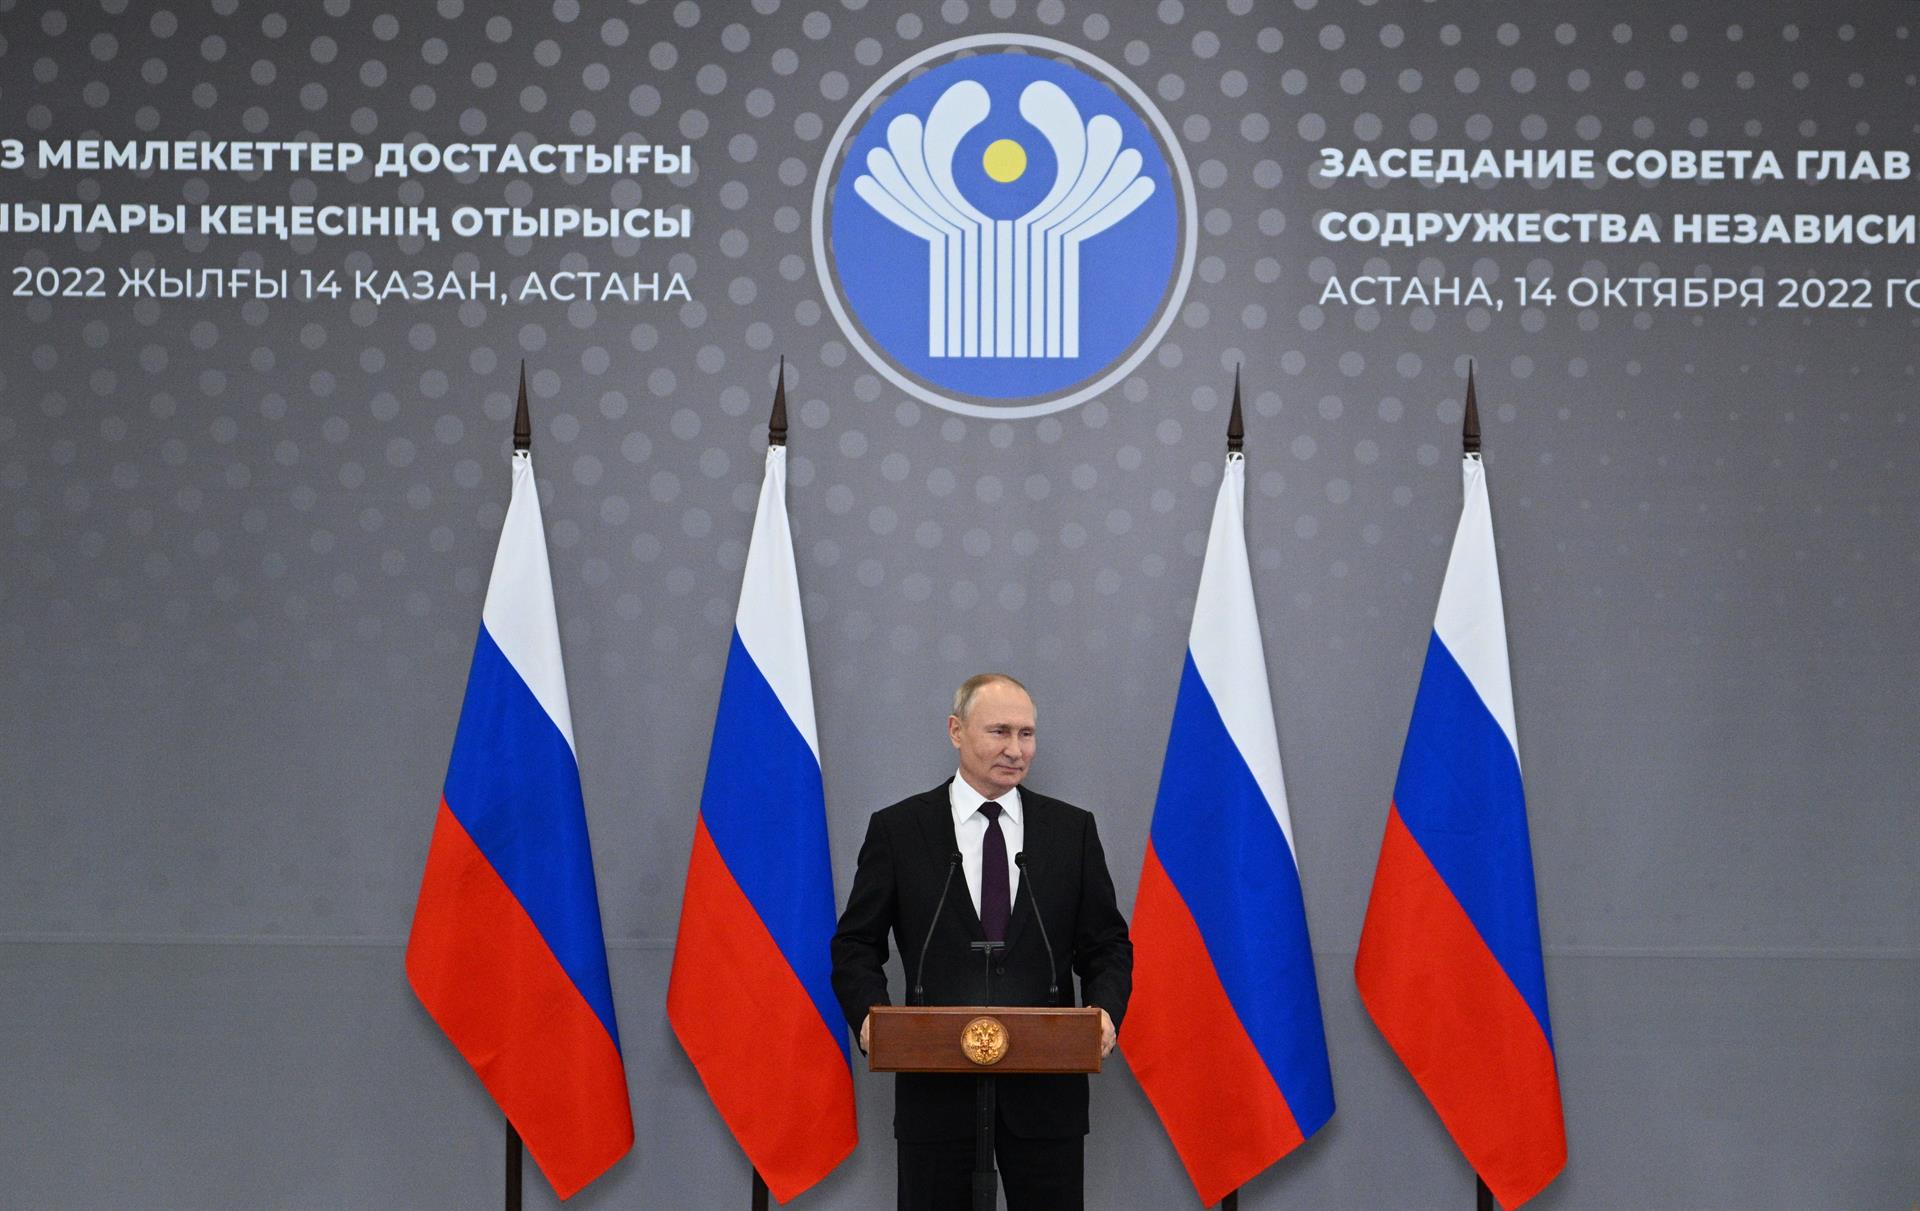 Putin da por terminados los ataques "masivos" y Zelenski promete vencer a Rusia